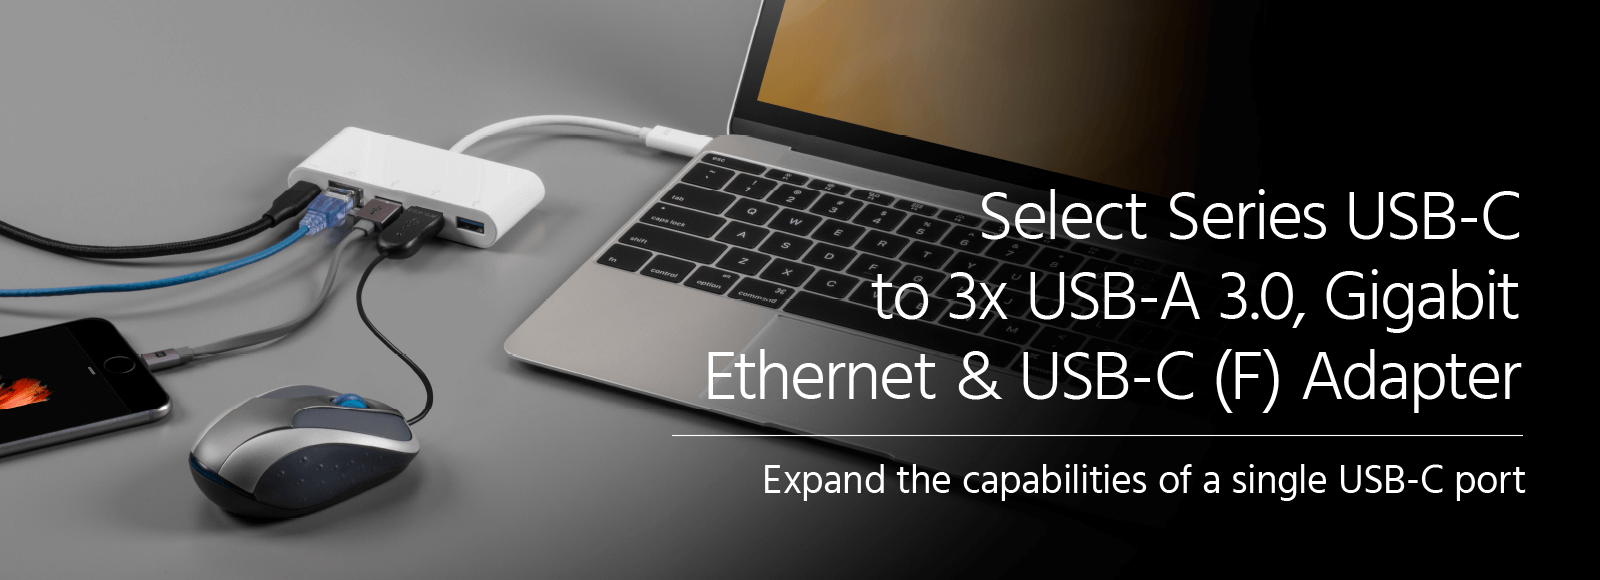 3x USB-A 3.0, Gigabit Ethernet & USB-C Adapter